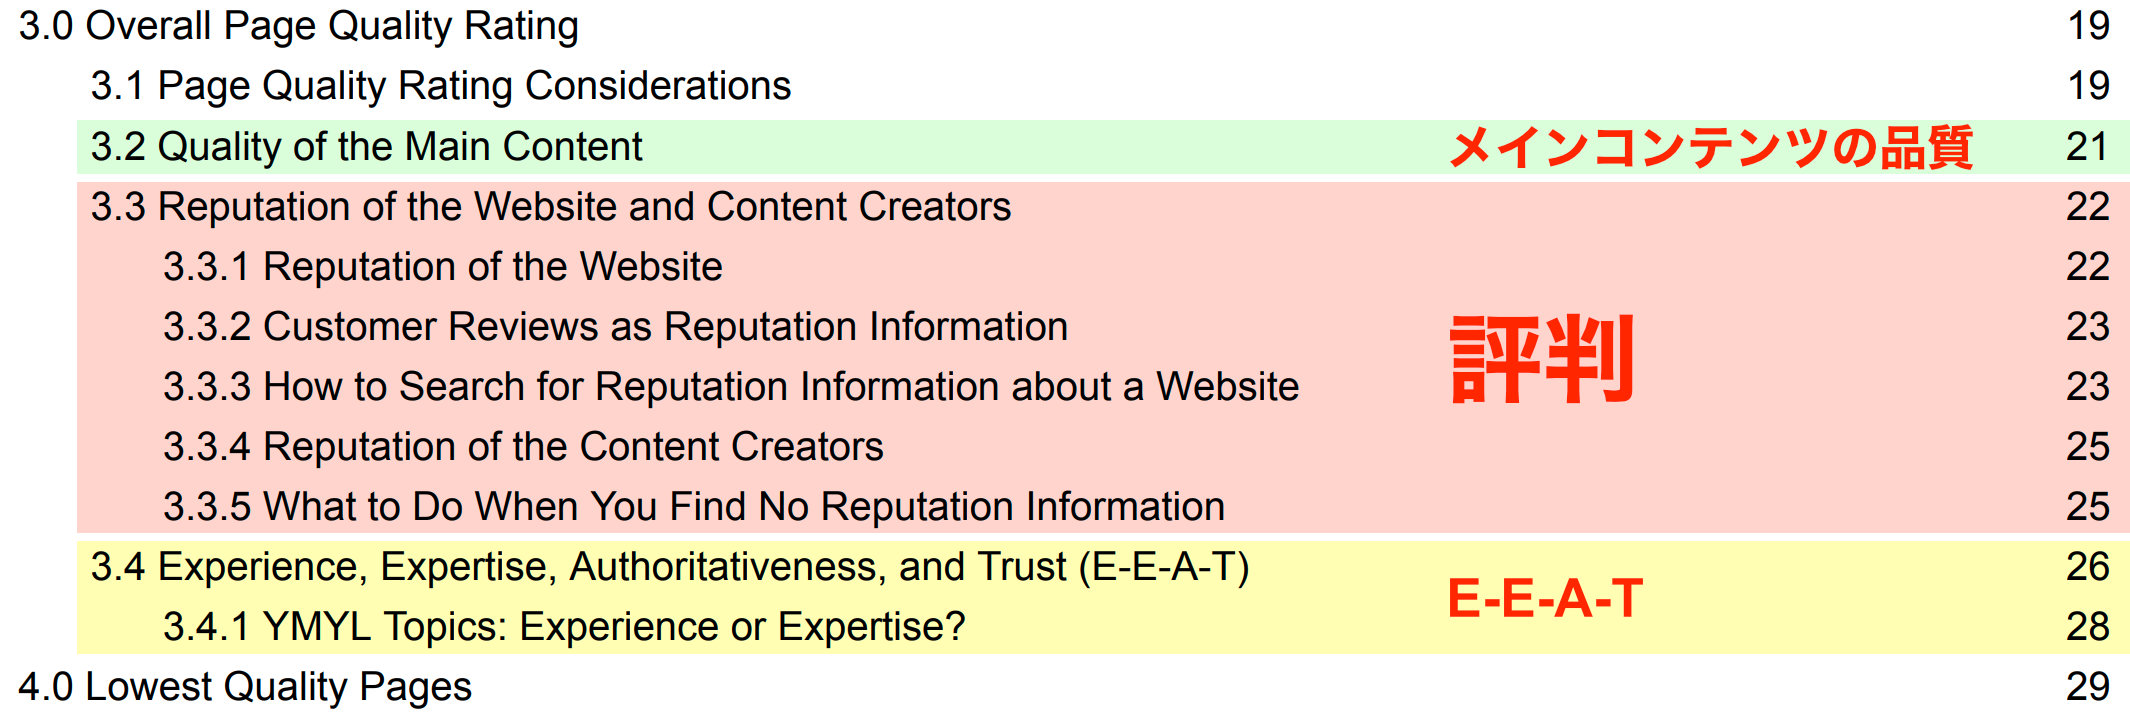 Google検索品質評価ガイドライン2022年版の目次のうち、セクション3「品質評価の全体」